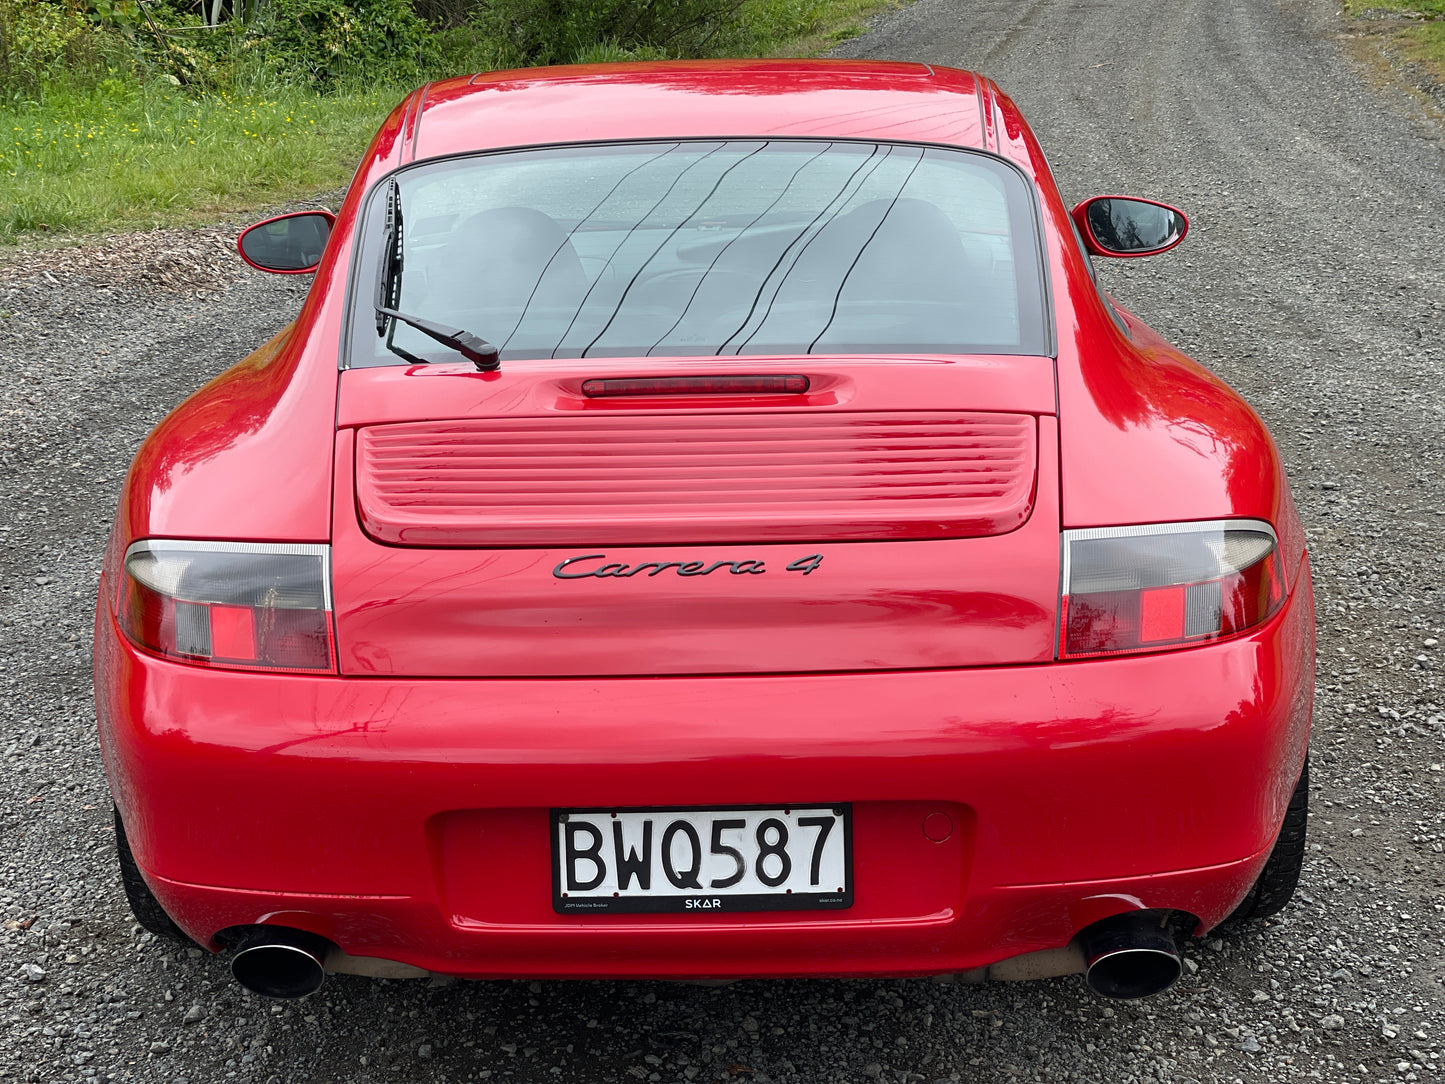 Porsche Carrera Manual - 1999